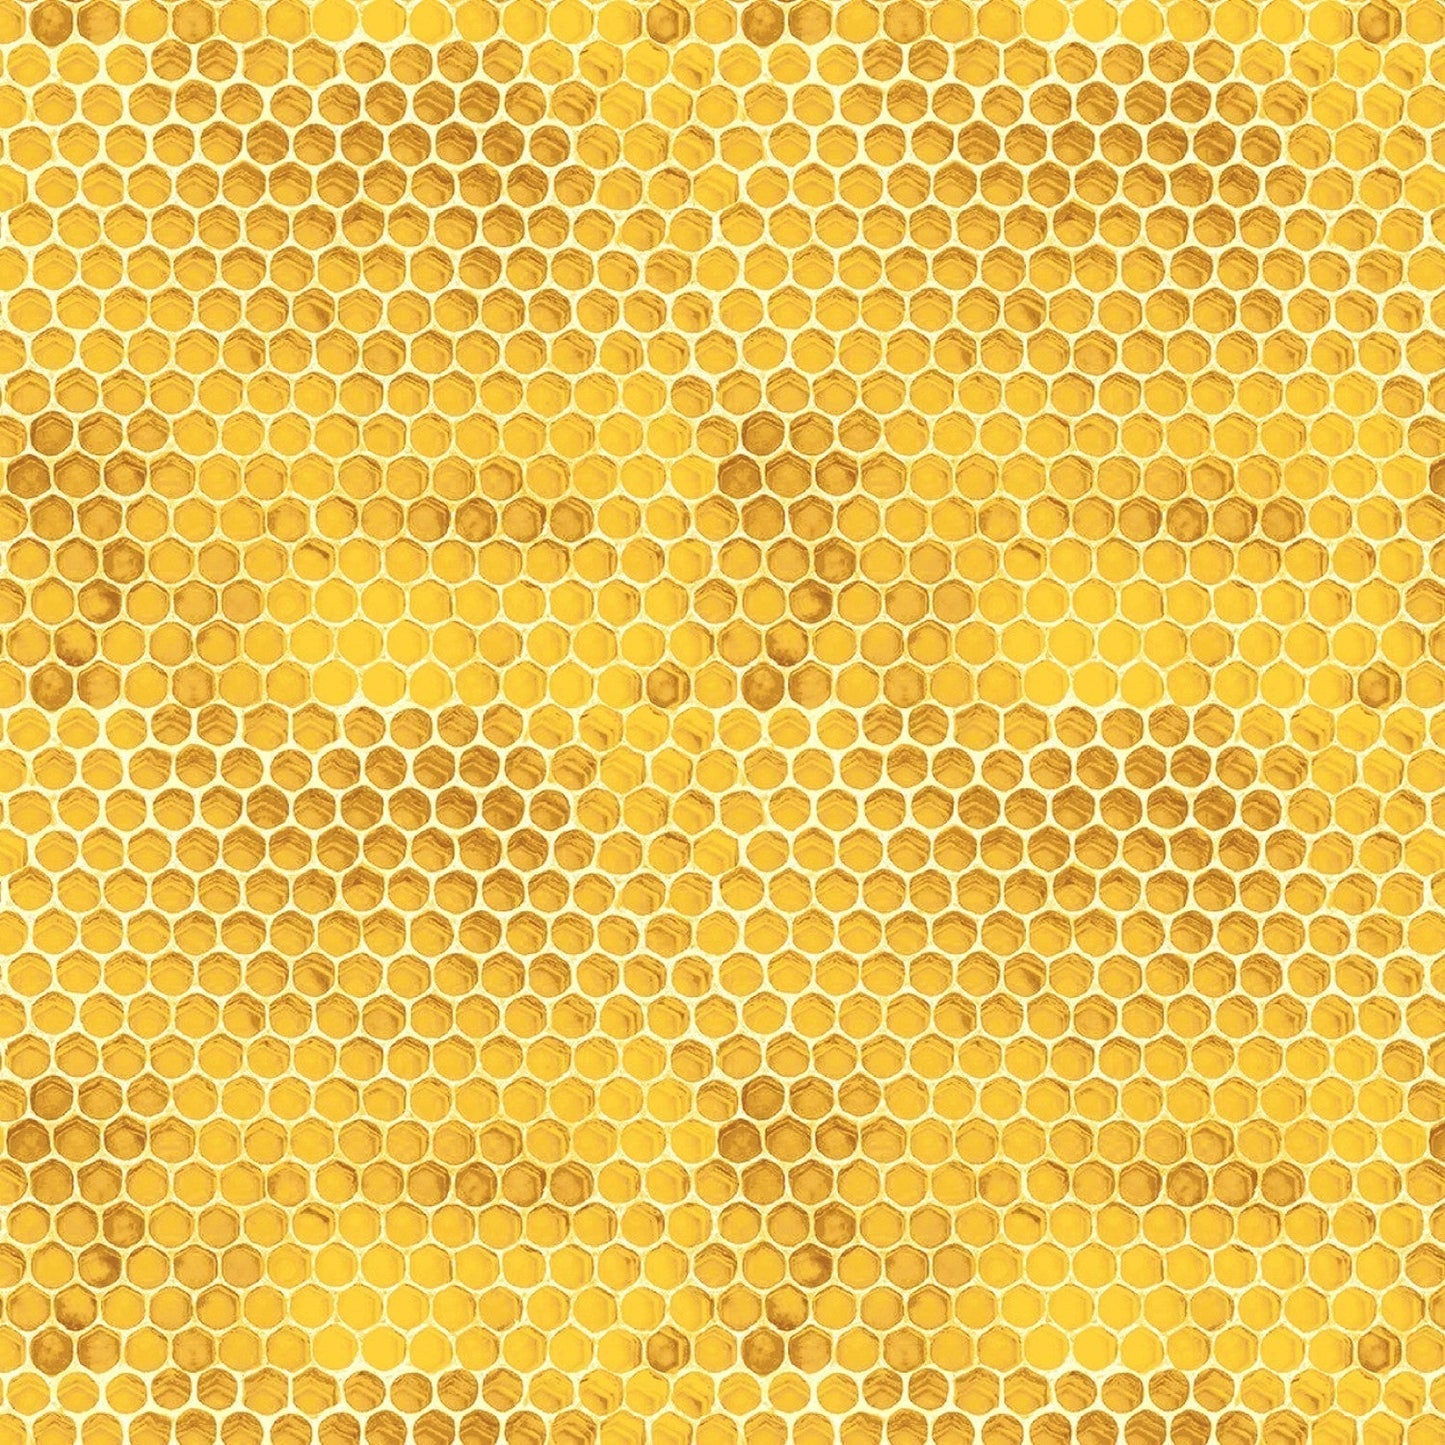 Timeless Treasures Fabric Bundle Honey Bee Farm 1 yard bundle (10 pieces) PREORDER